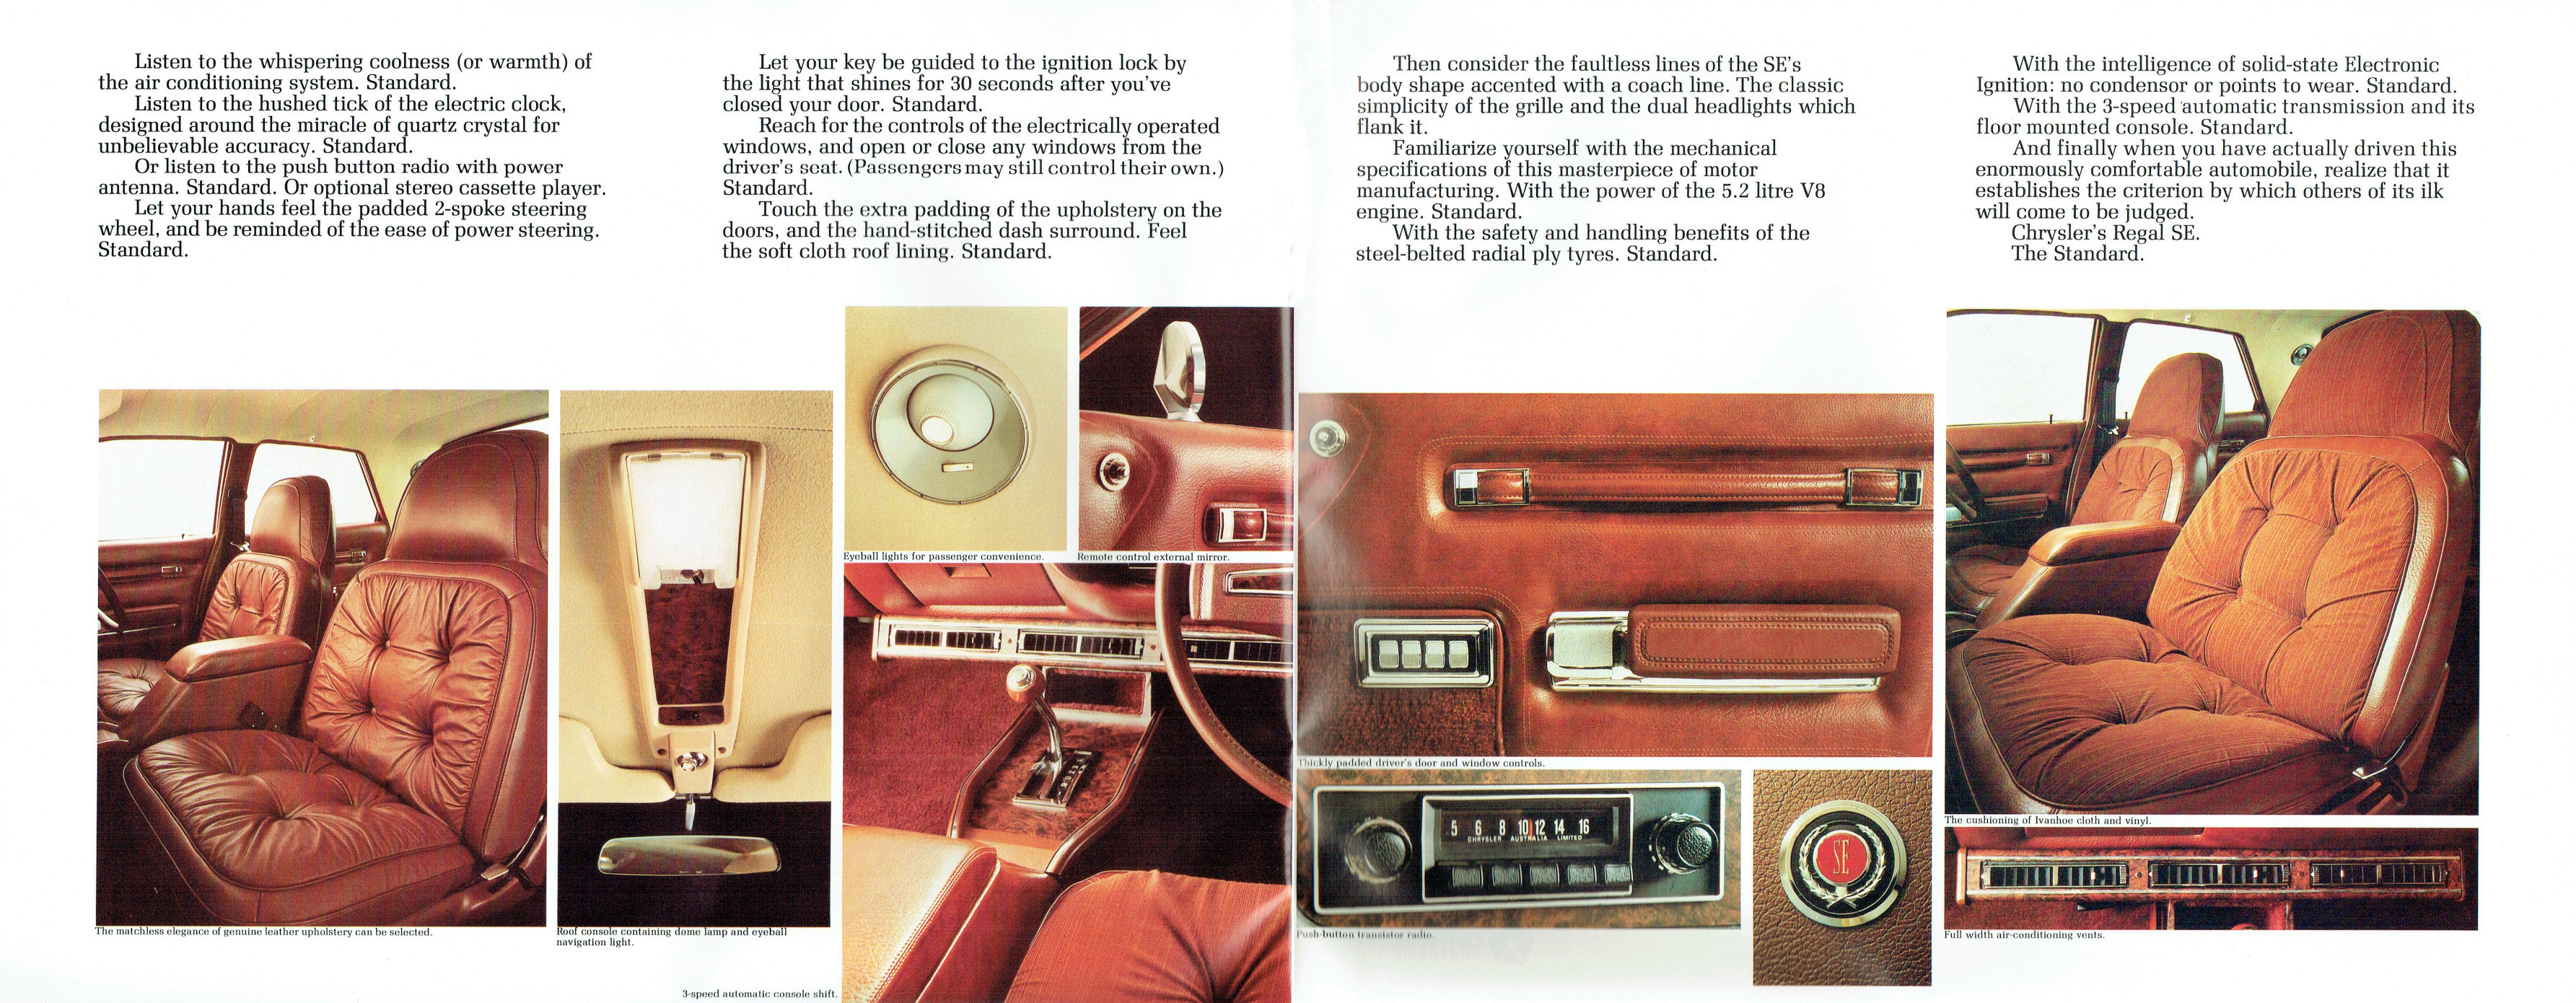 1976_Chrysler_CL_Regal_SE-12-13